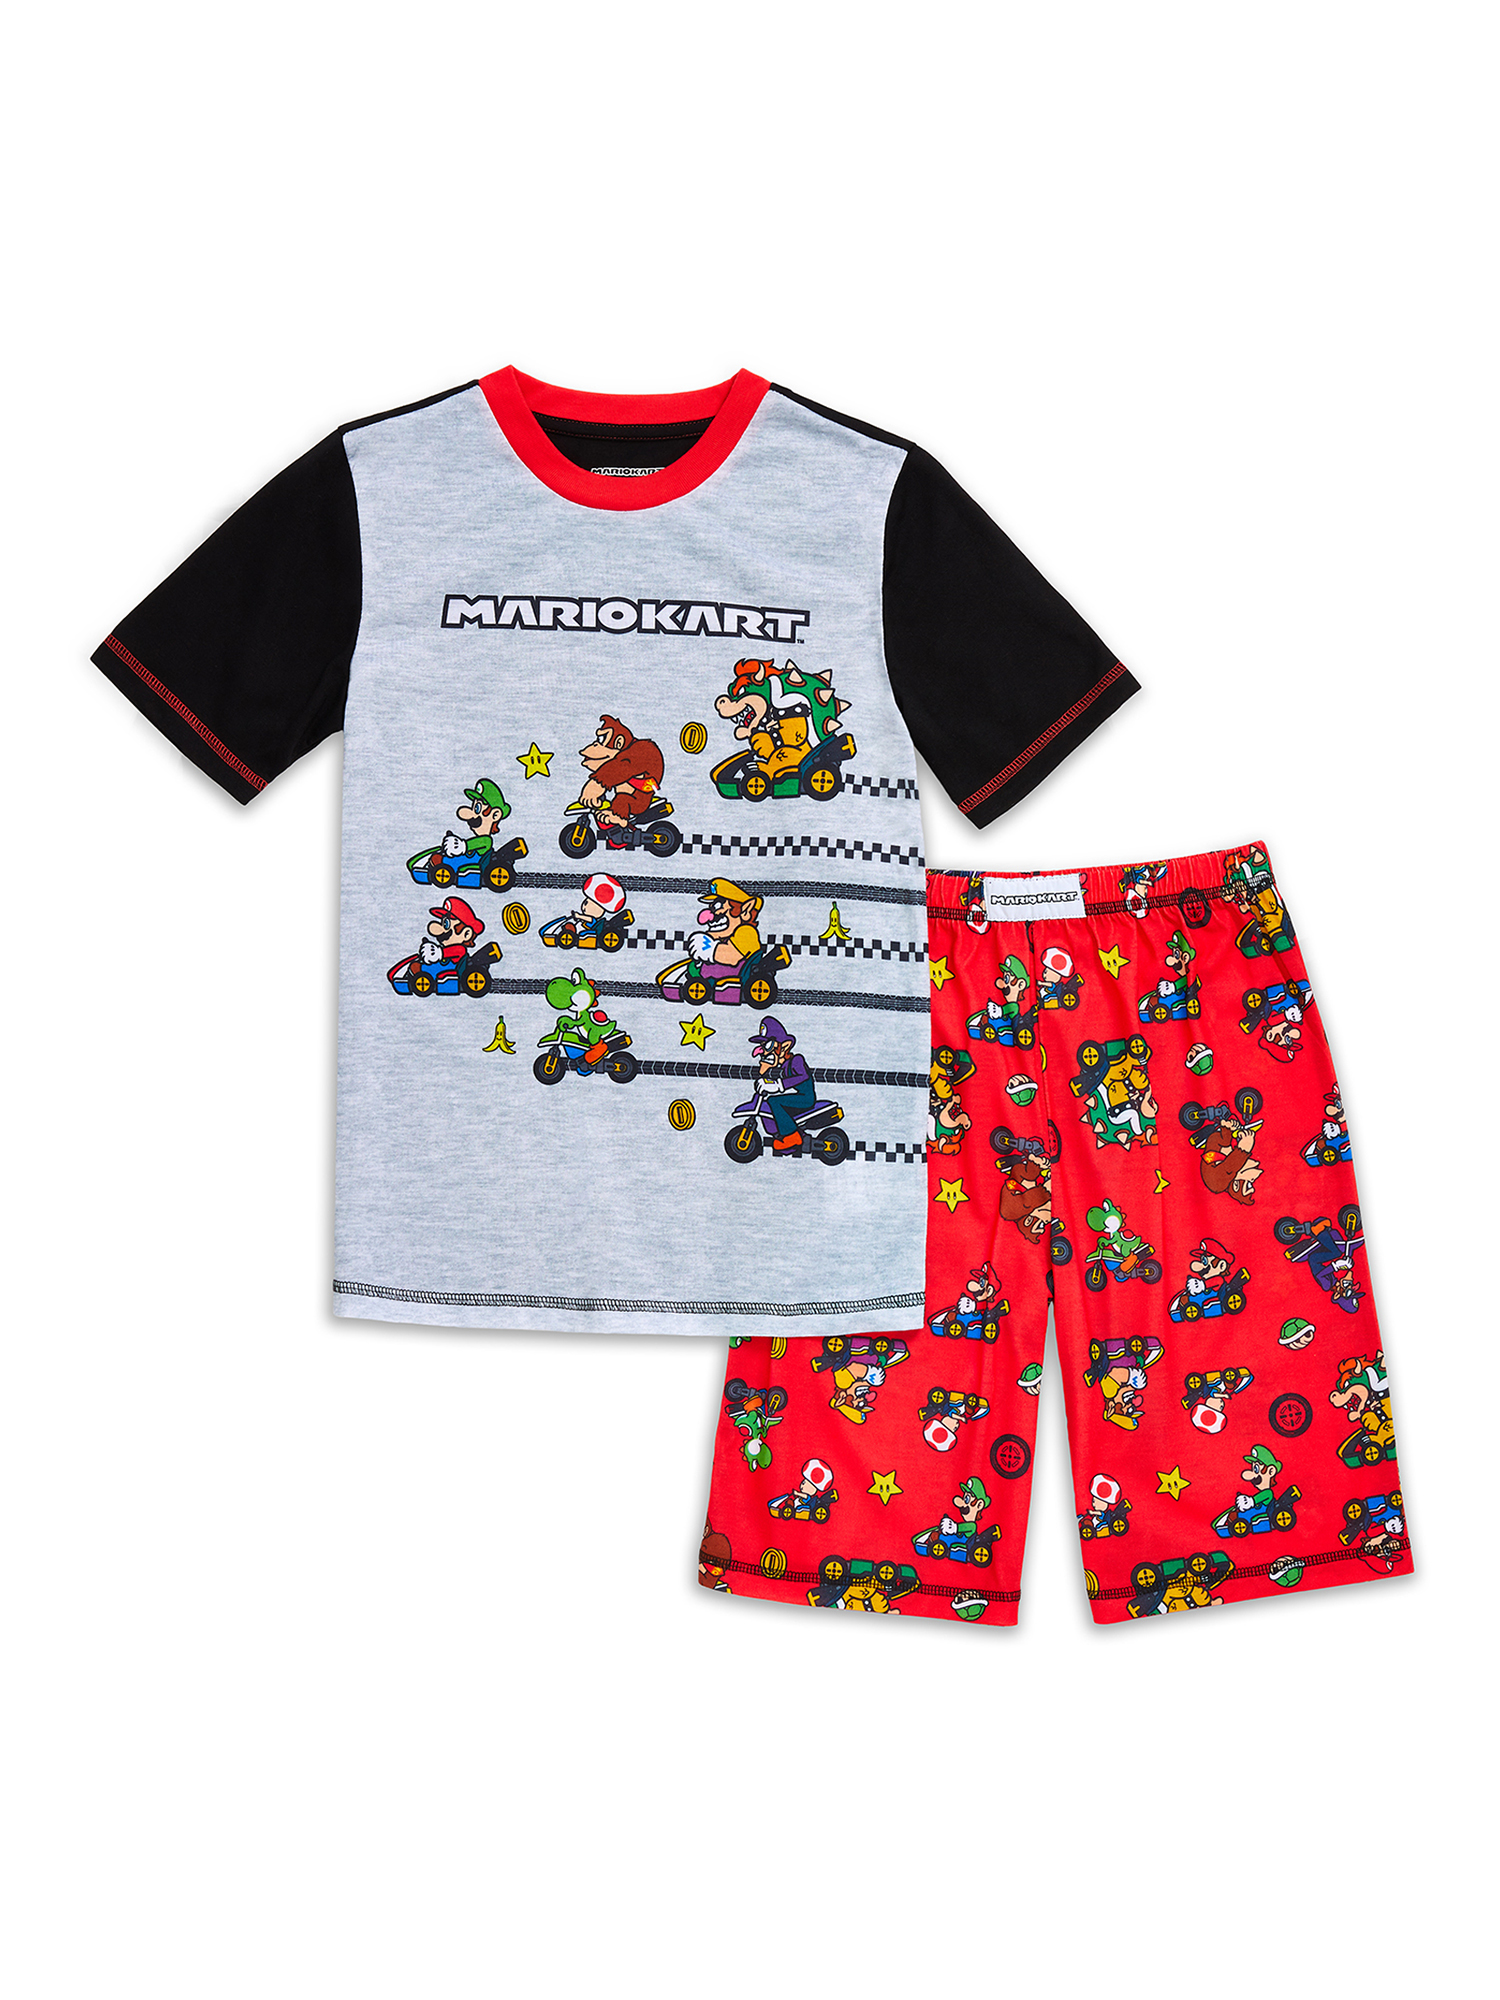 Boys Small 6-7 Mariokart Super Mario Pajamas Short Sleeve Shirt Shorts PJ Set